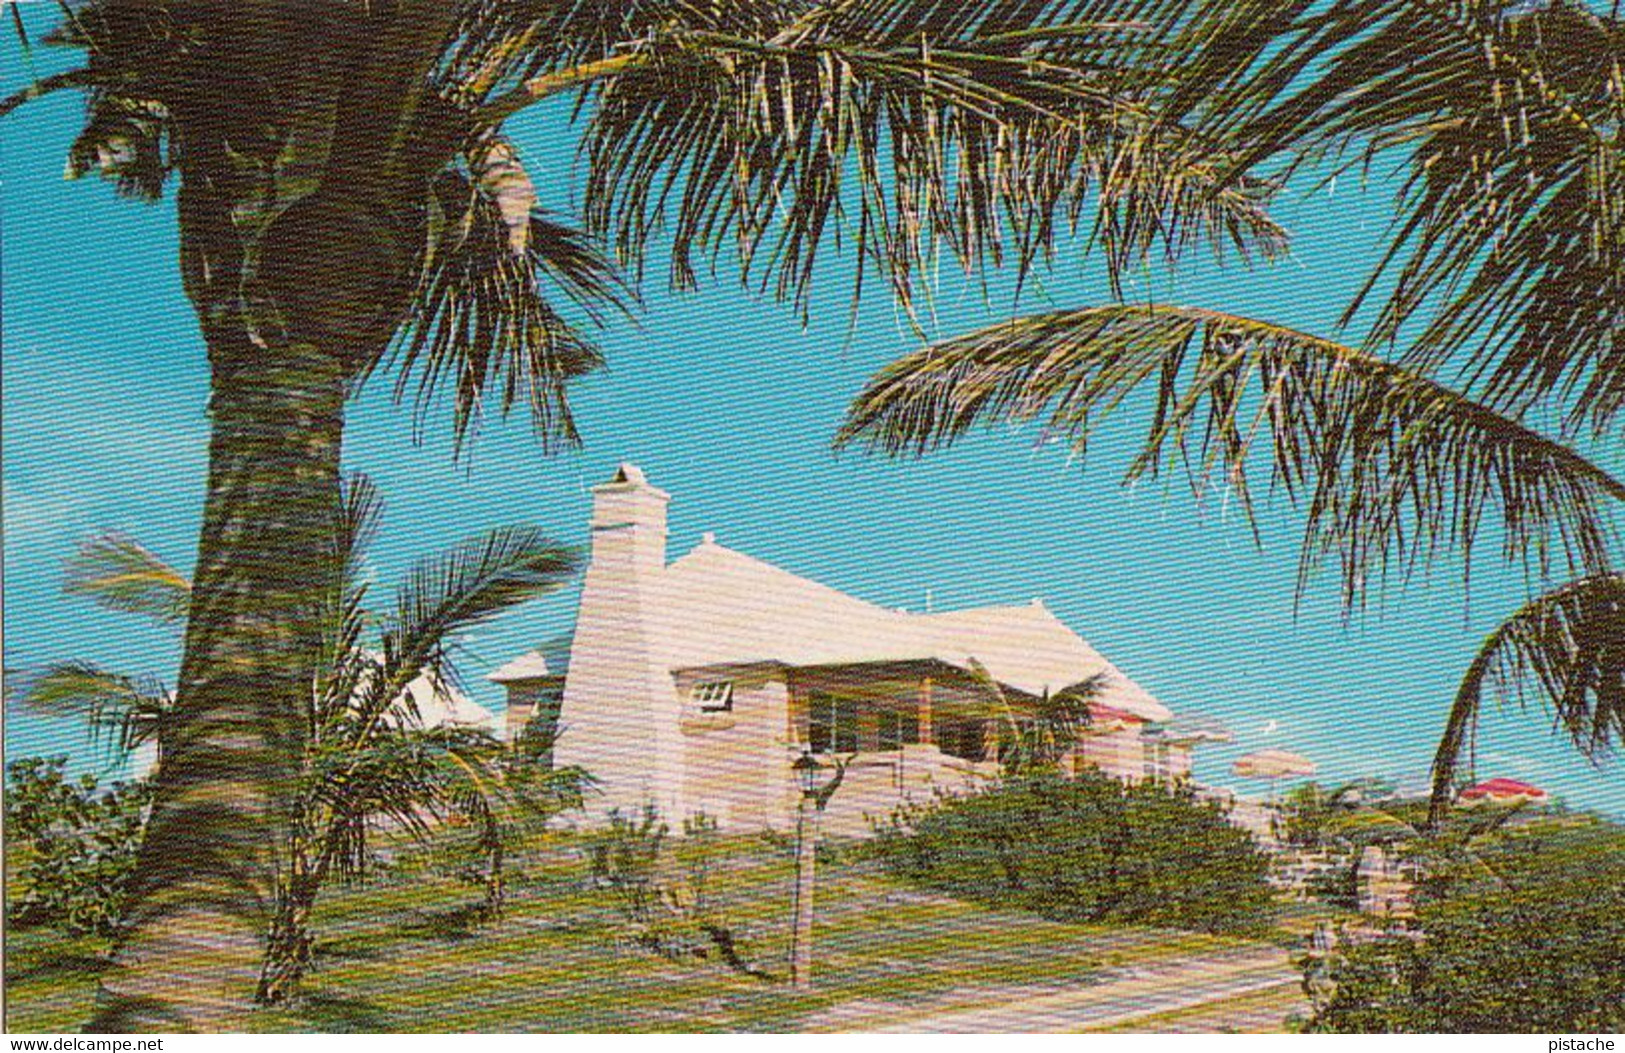 Bermuda - Bermudas - Cottage House Architecture -  Unused - VG Condition - 2 Scans - Bermuda